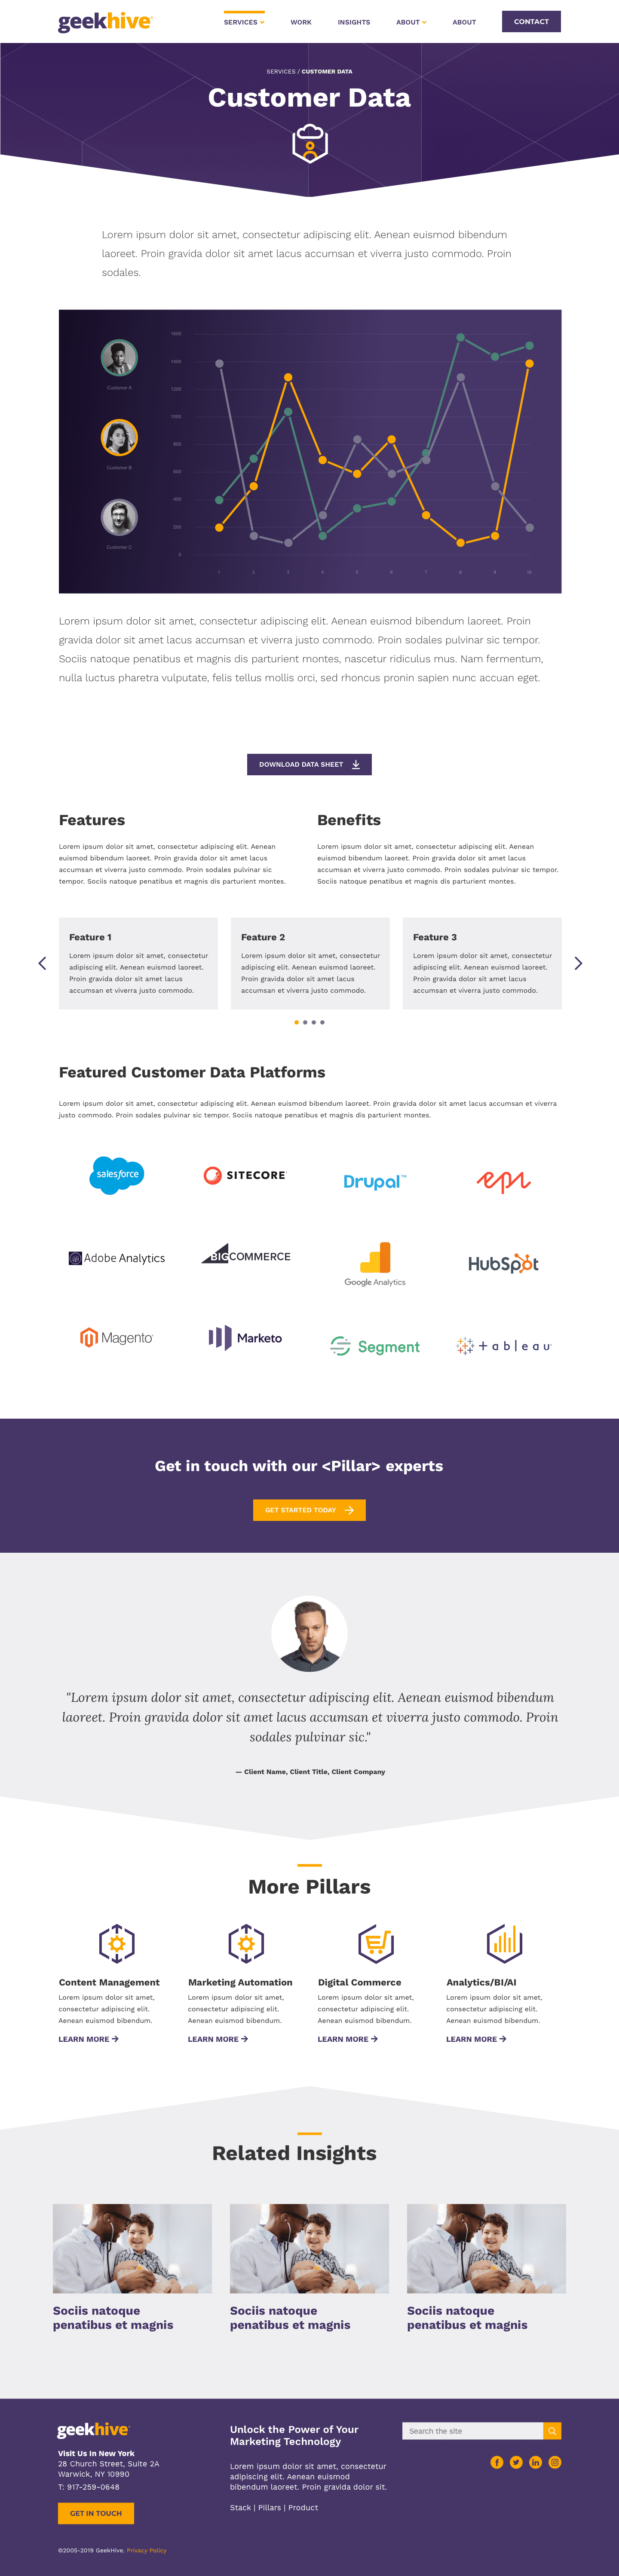 Screenshot of the Geekhive Customer Data website landing page.